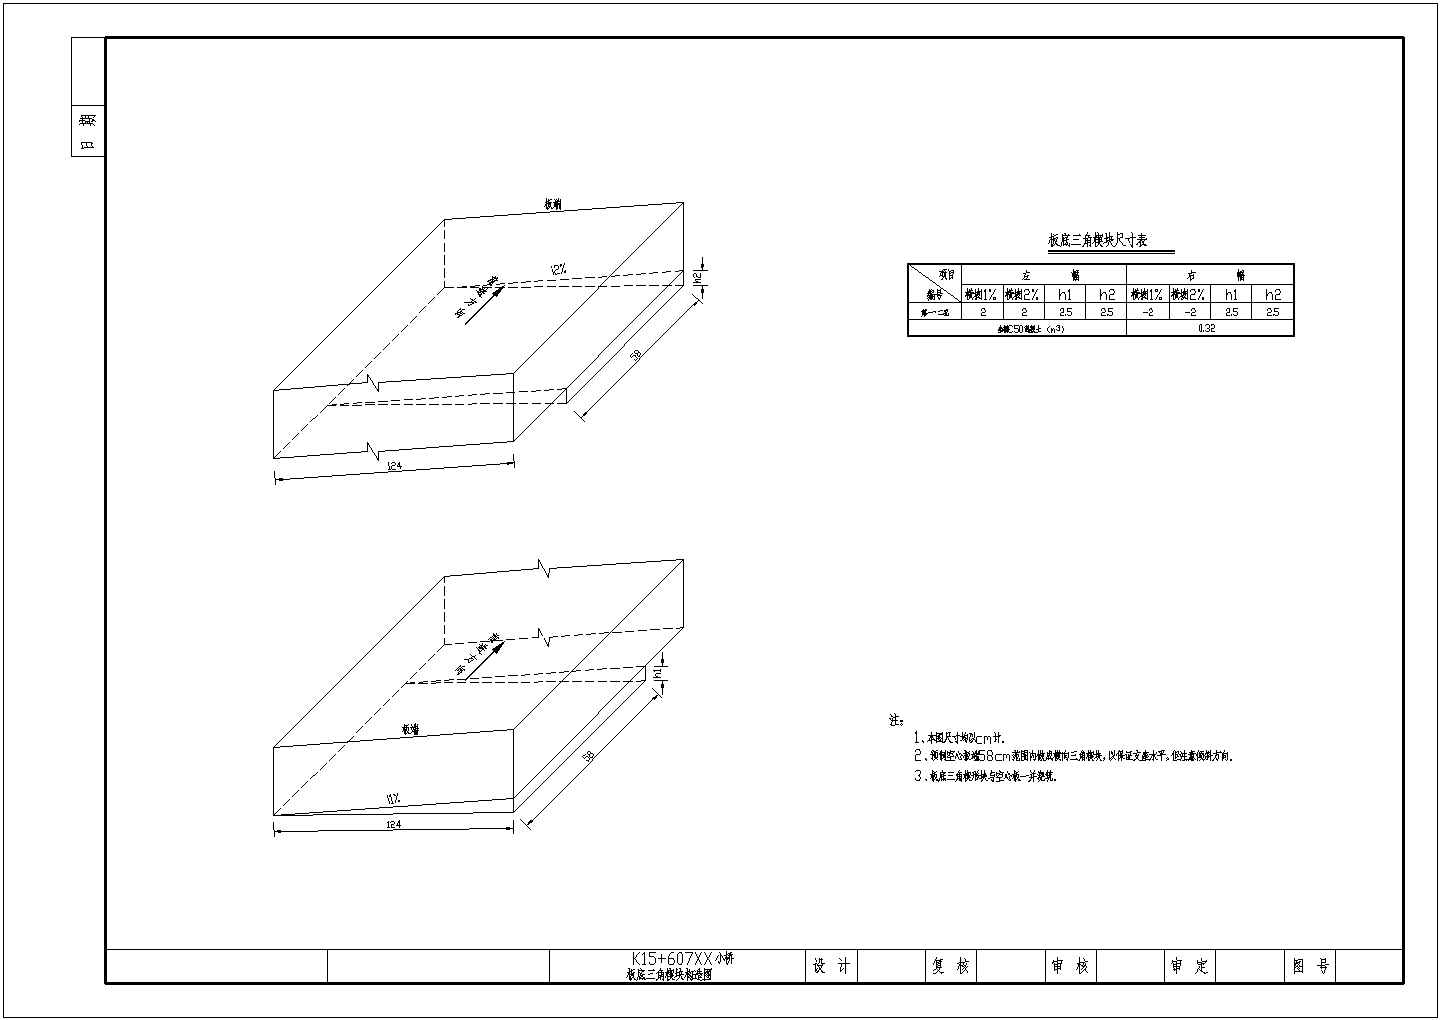 2×10m预应力混凝土简支空心板桥全套施工图设计，35张图纸